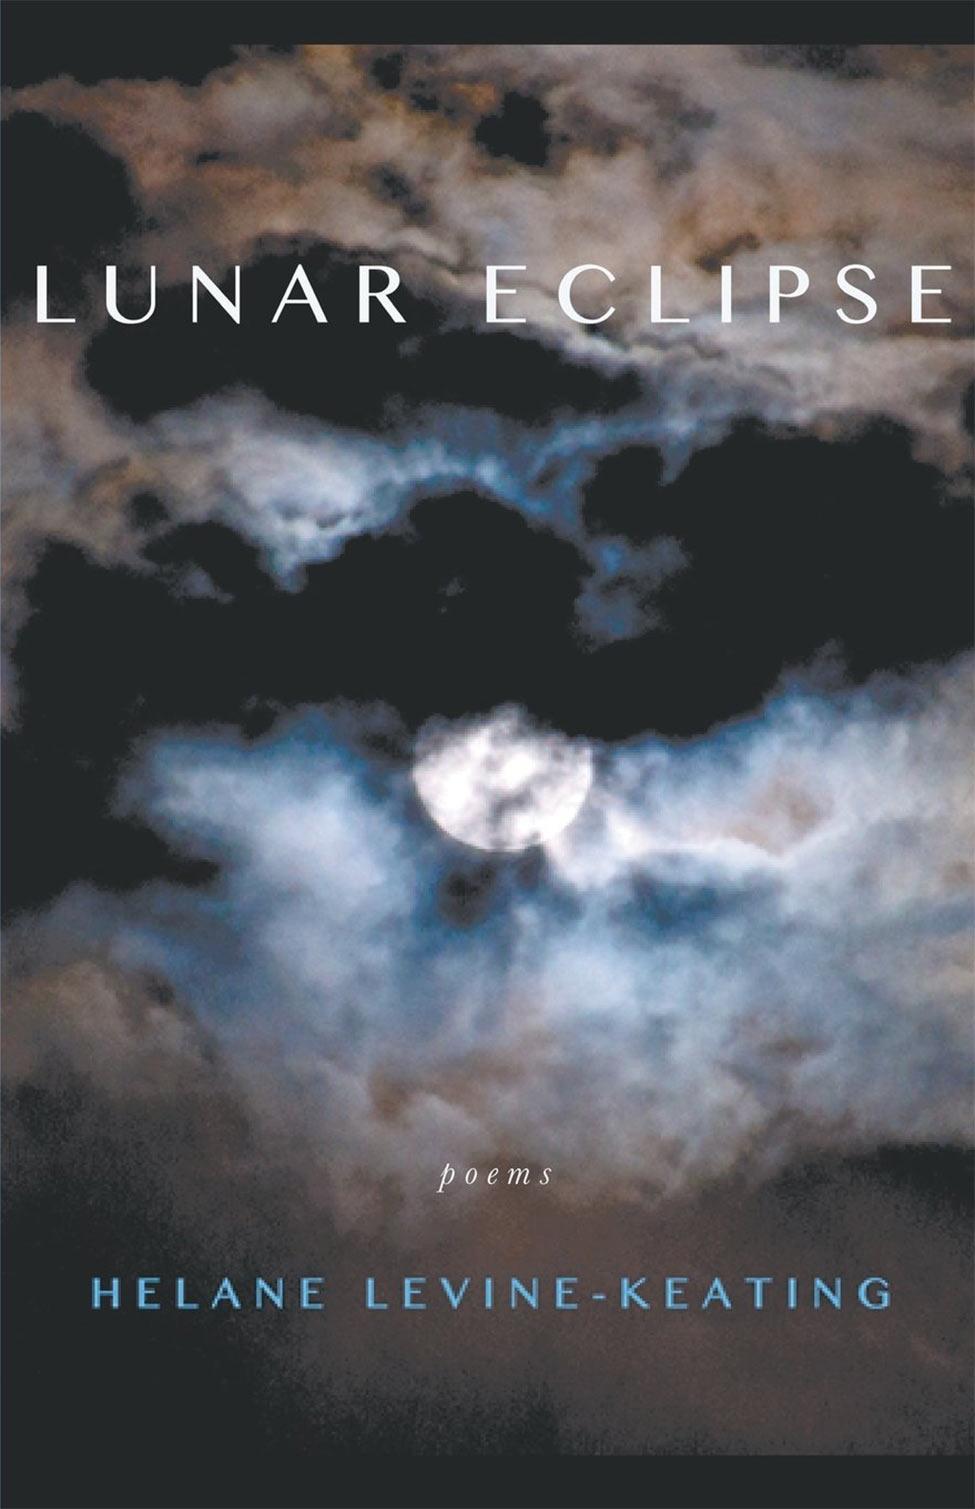 Lunar Eclipse by Helane Levine-Keating